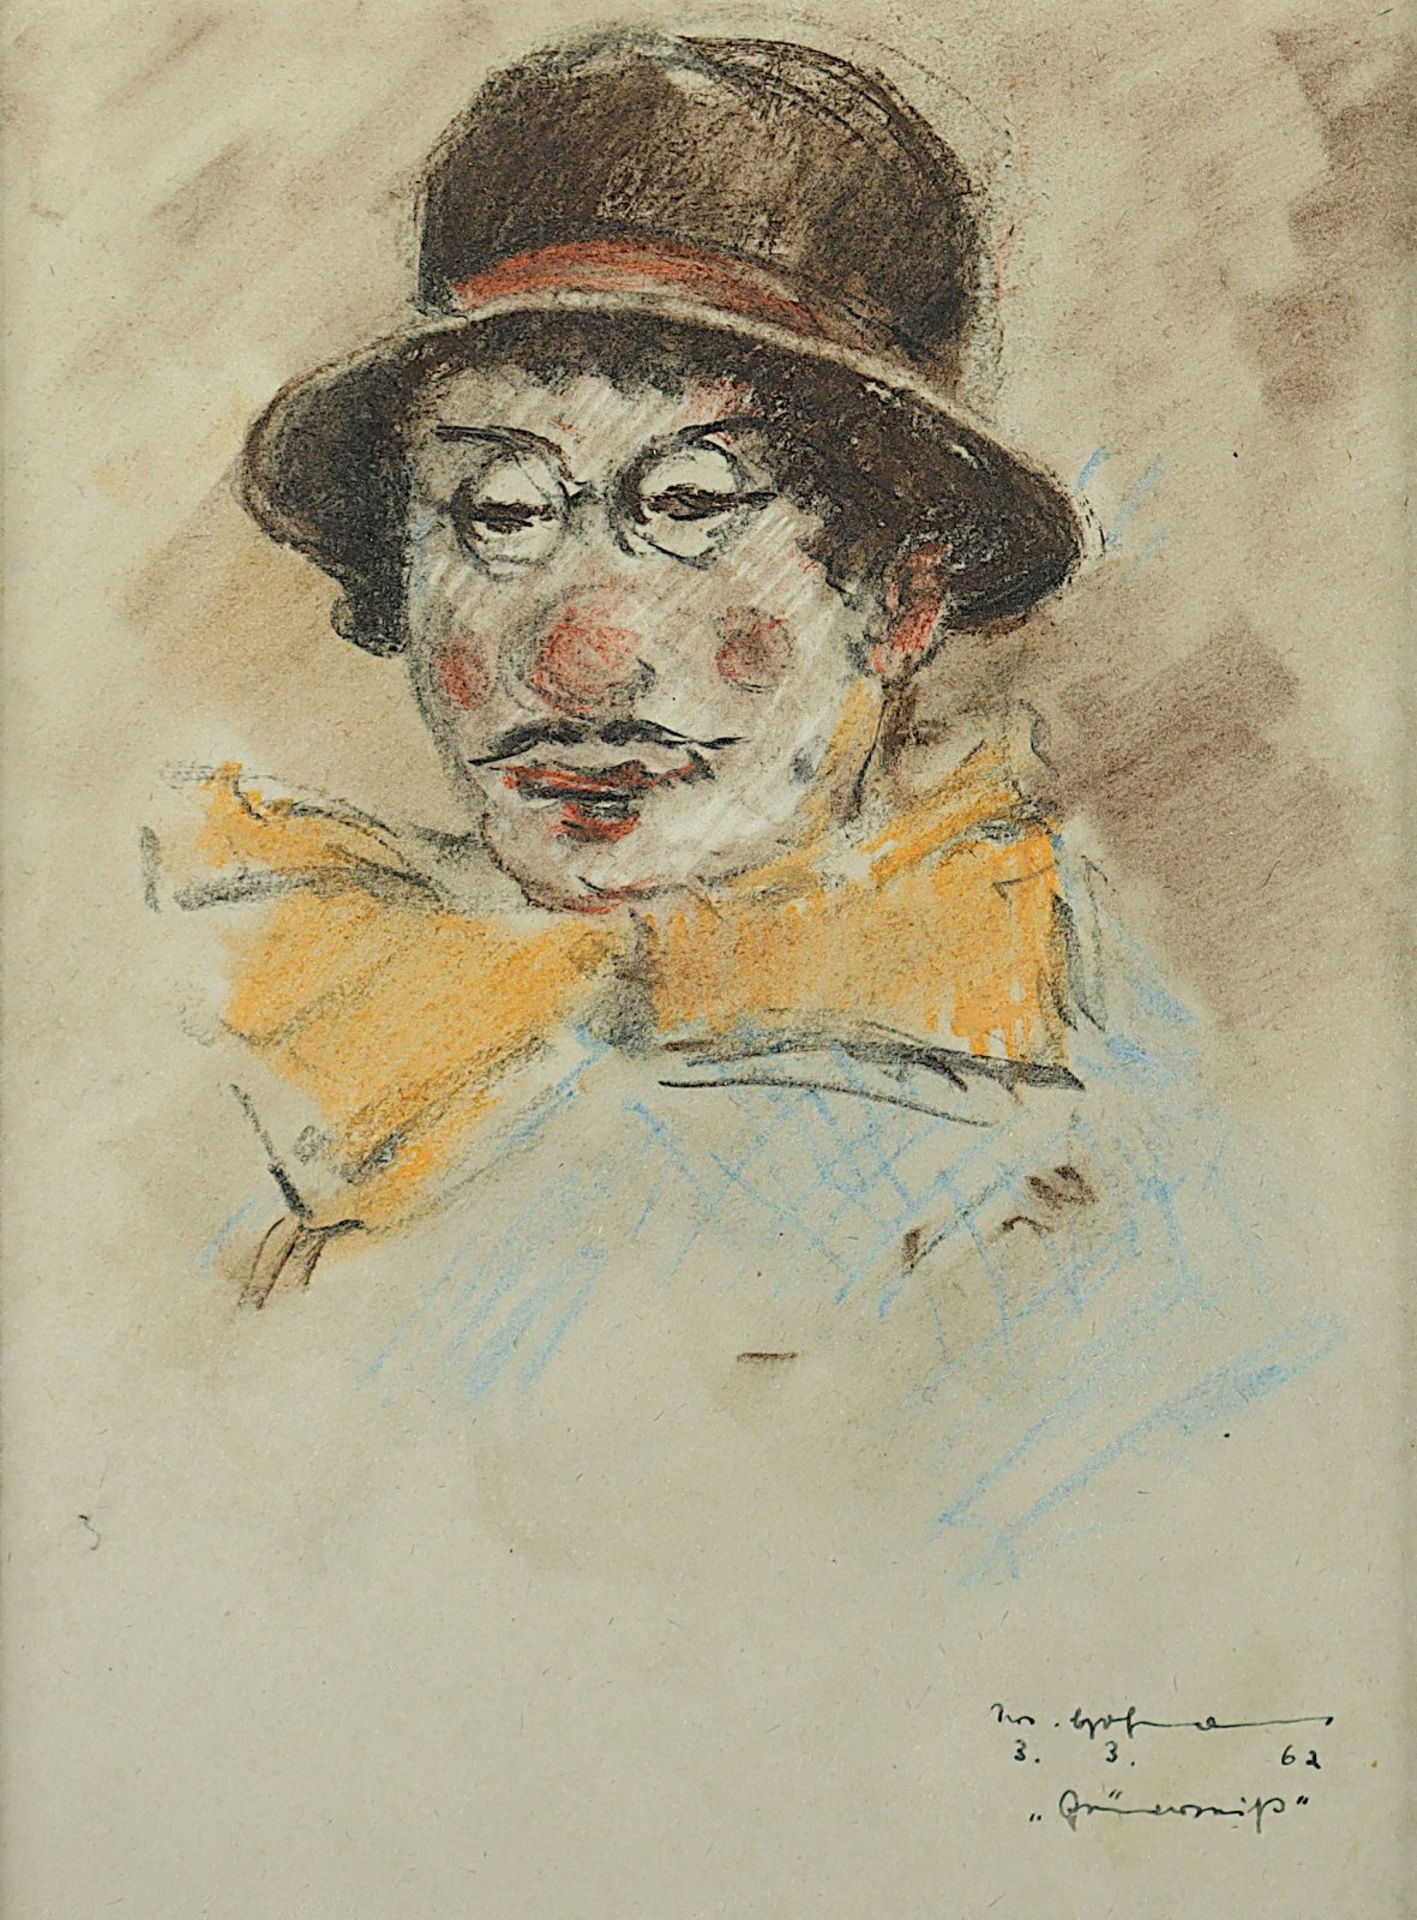 HOHMANN, Willy (1897-1963), "Clown",